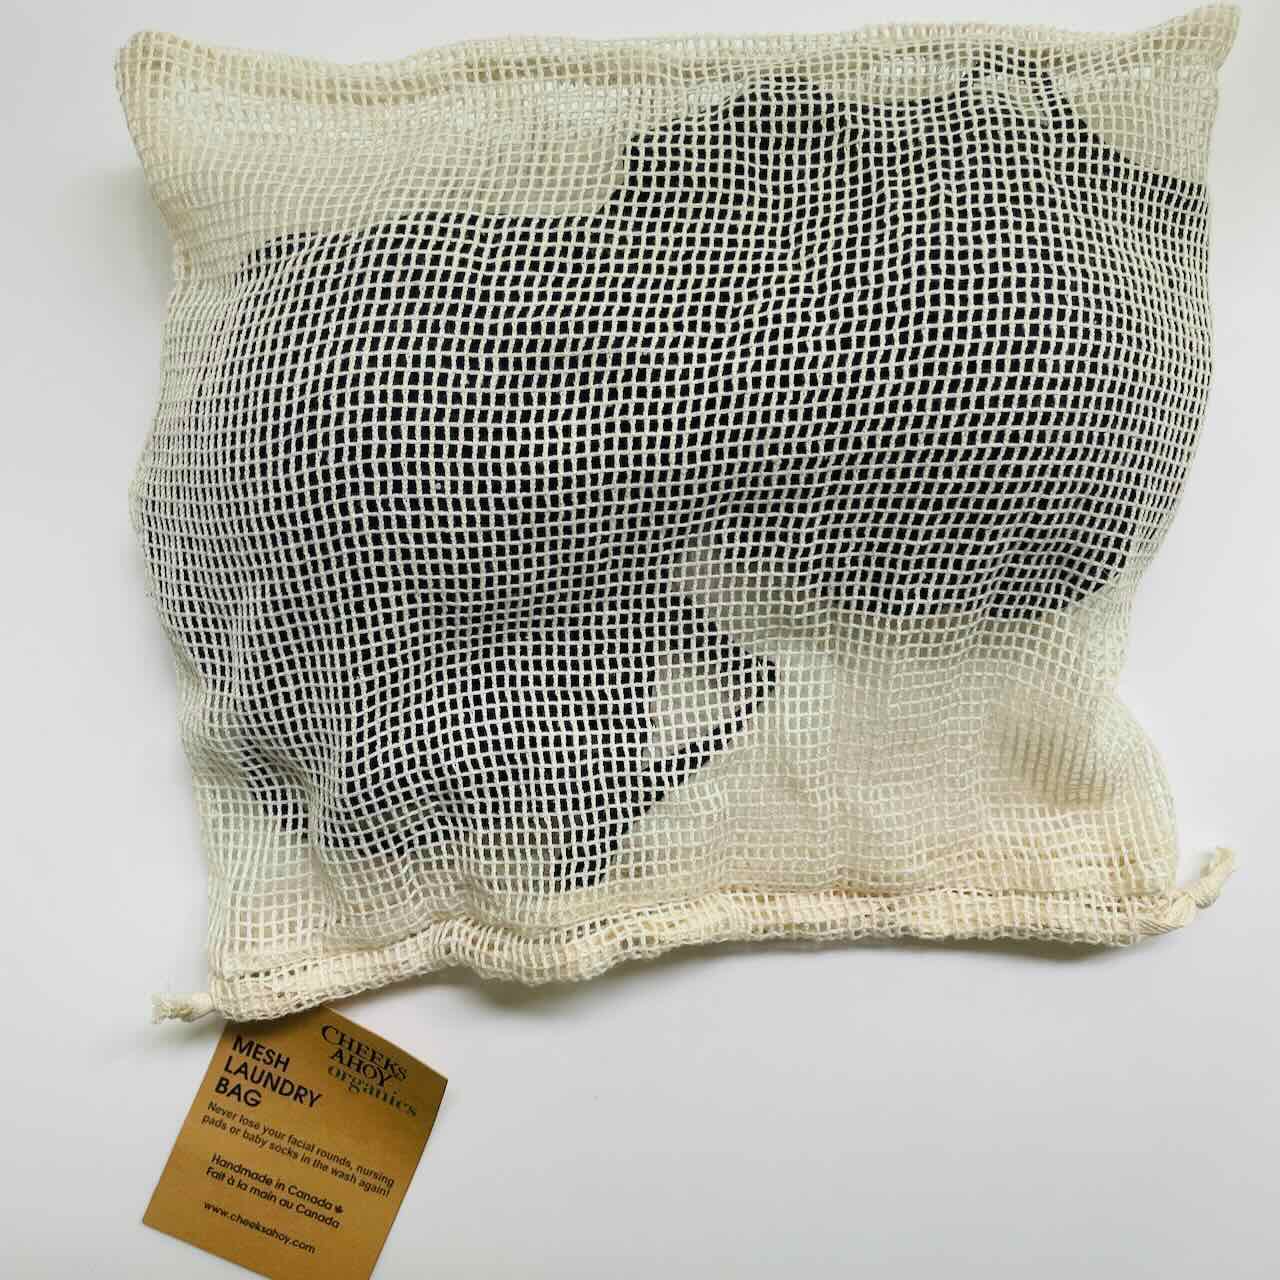 Cheeks Ahoy - Organic Cotton Mesh Laundry Wash Bag With Drawstring - 10x9  – Aiteall